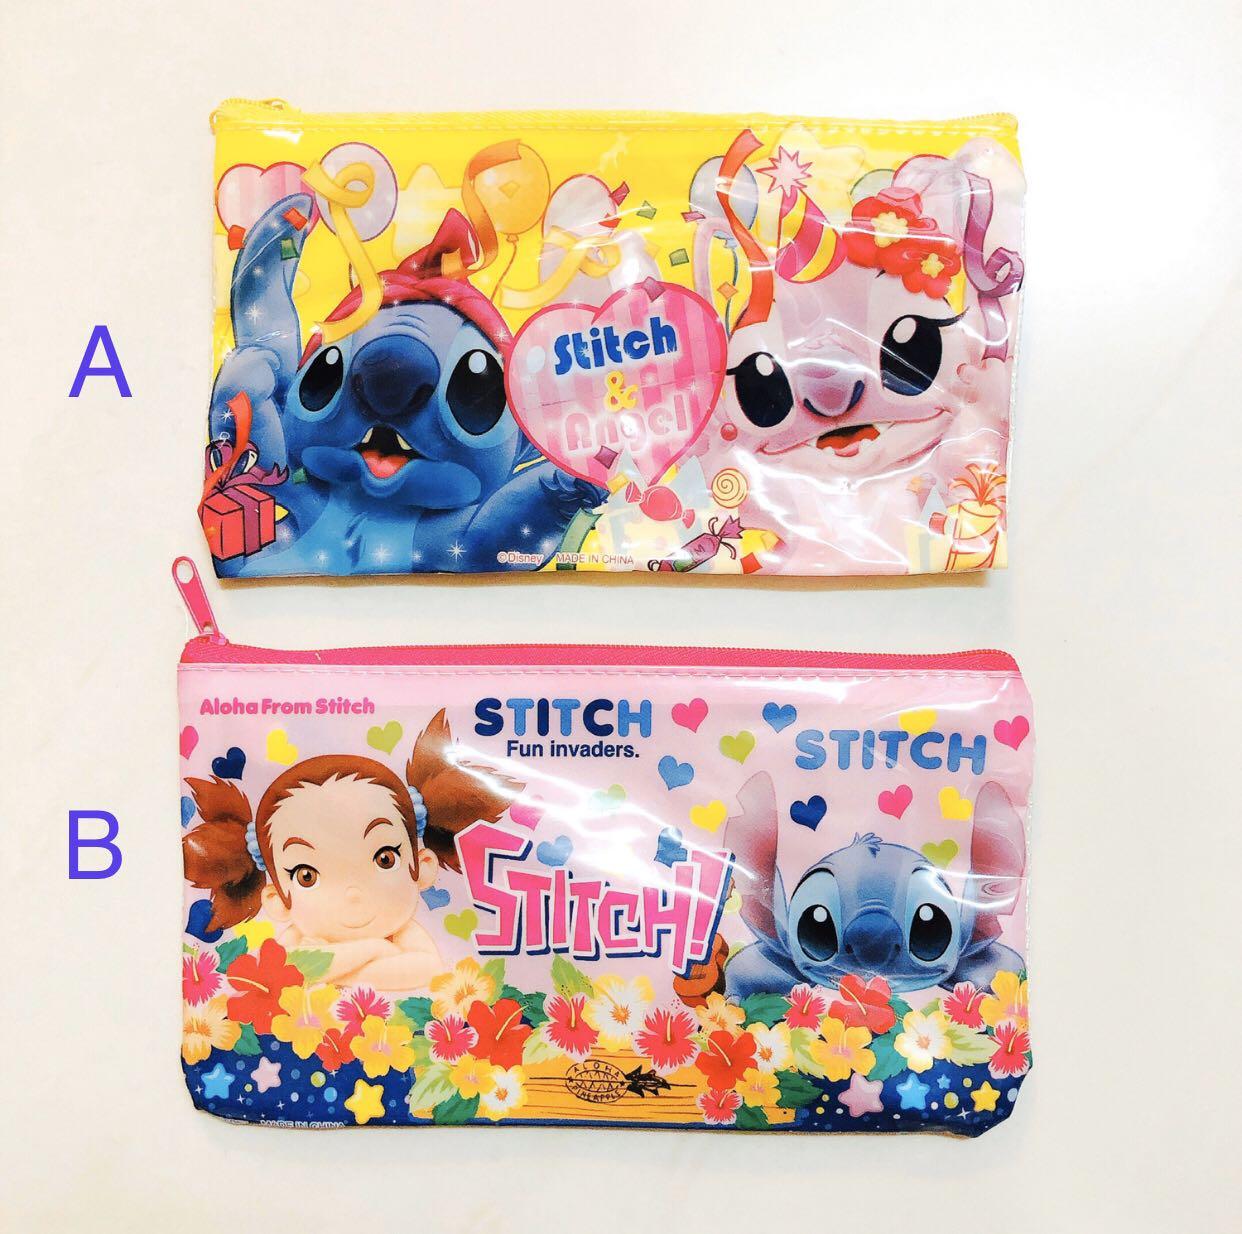 Disney Stitch pencil case